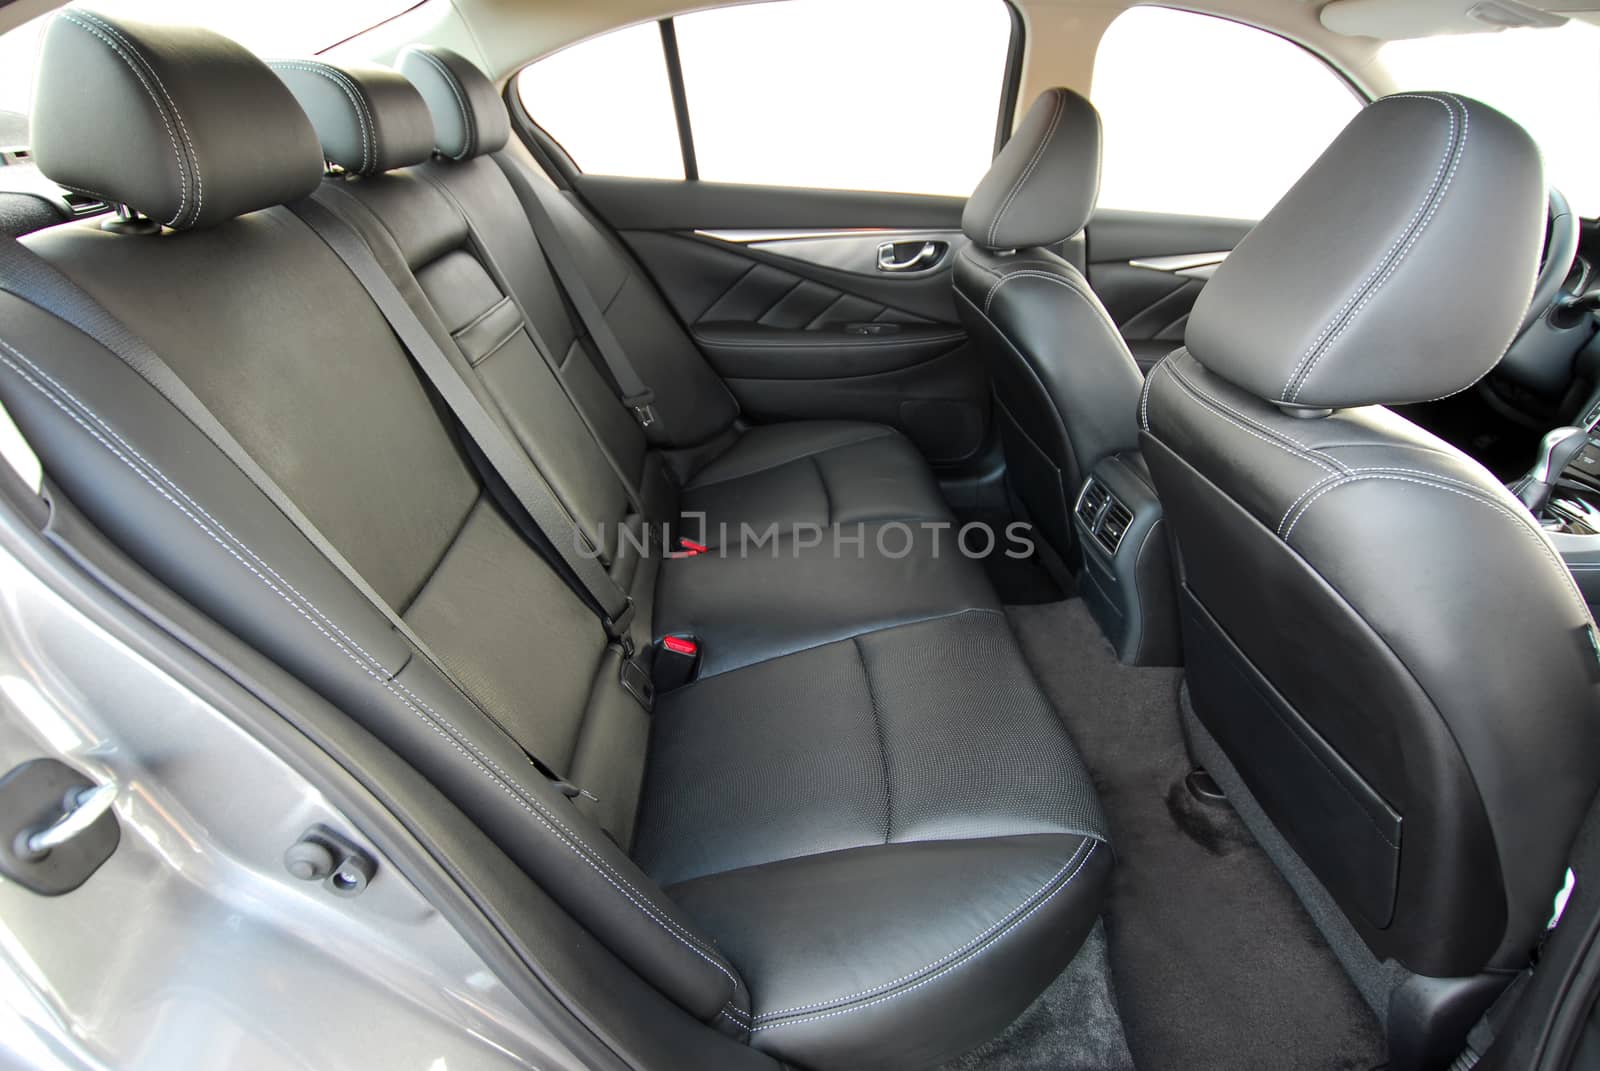 rear seats in passenger car